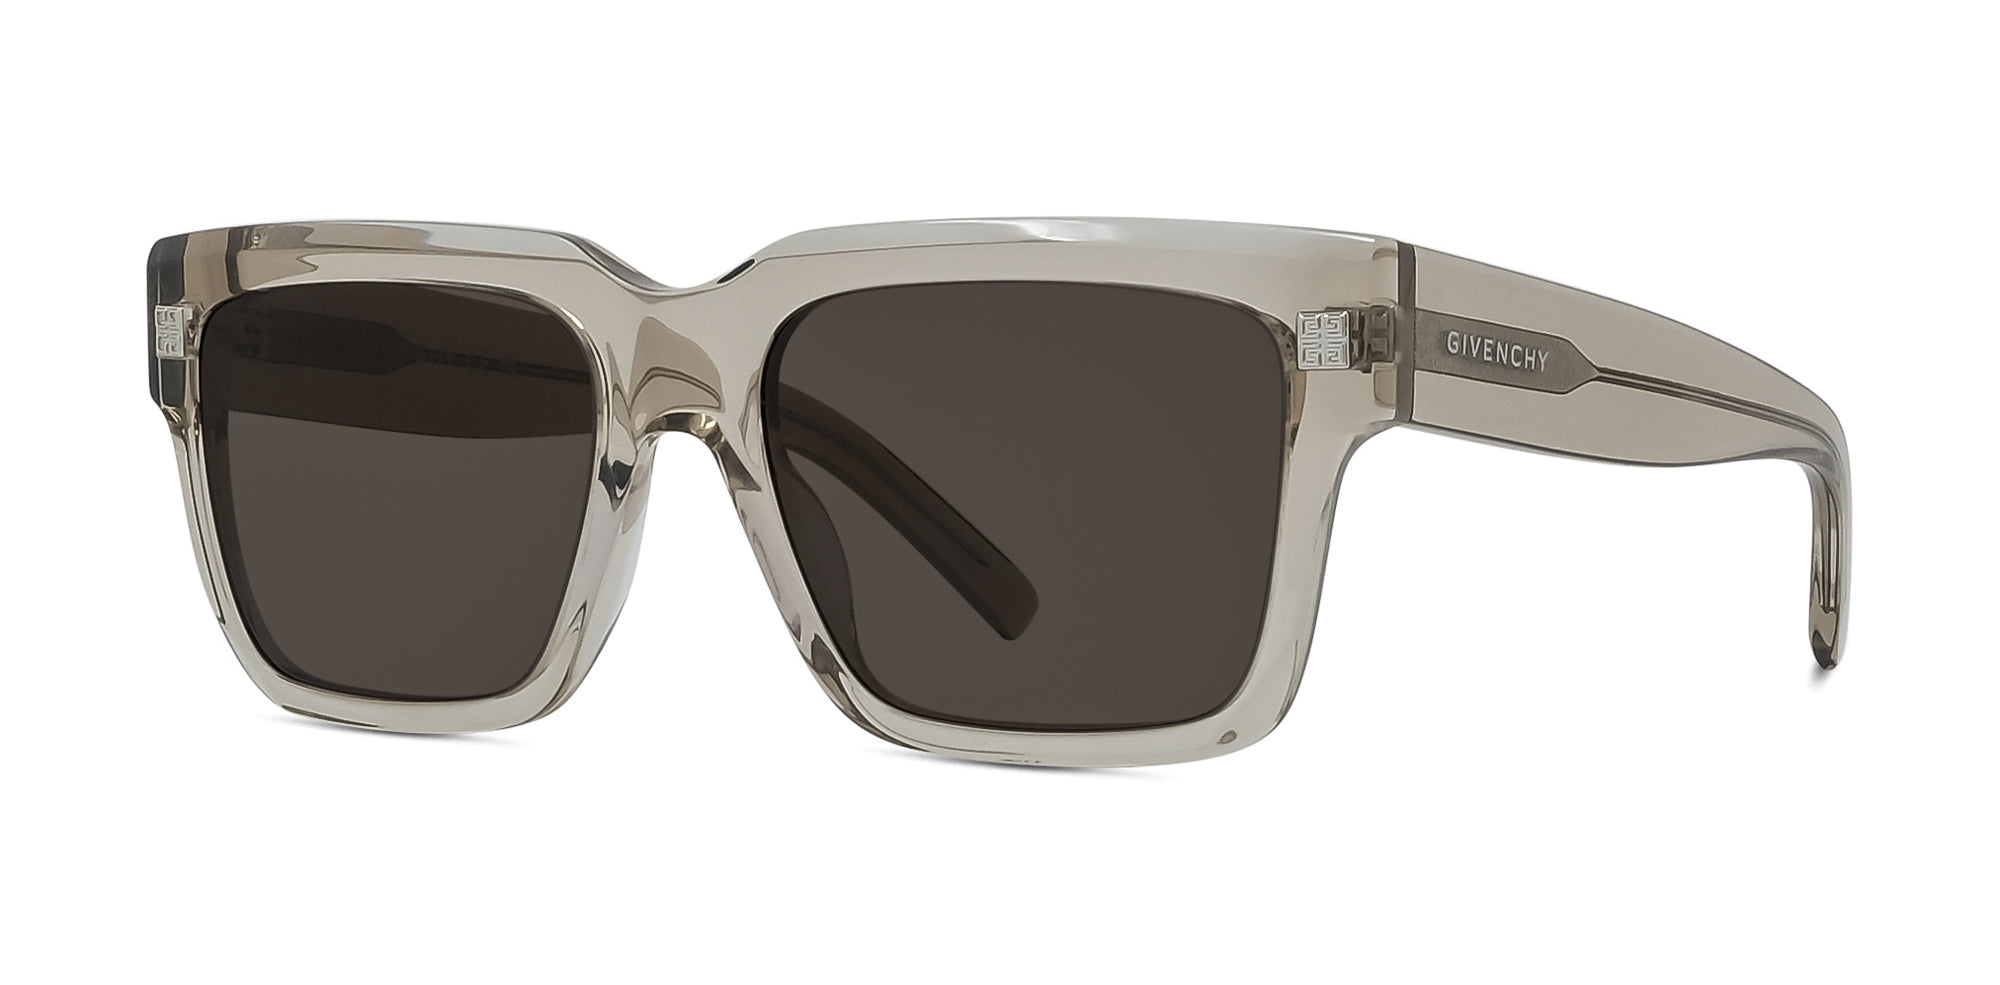 Buy Givenchy Sunglasses | SmartBuyGlasses India